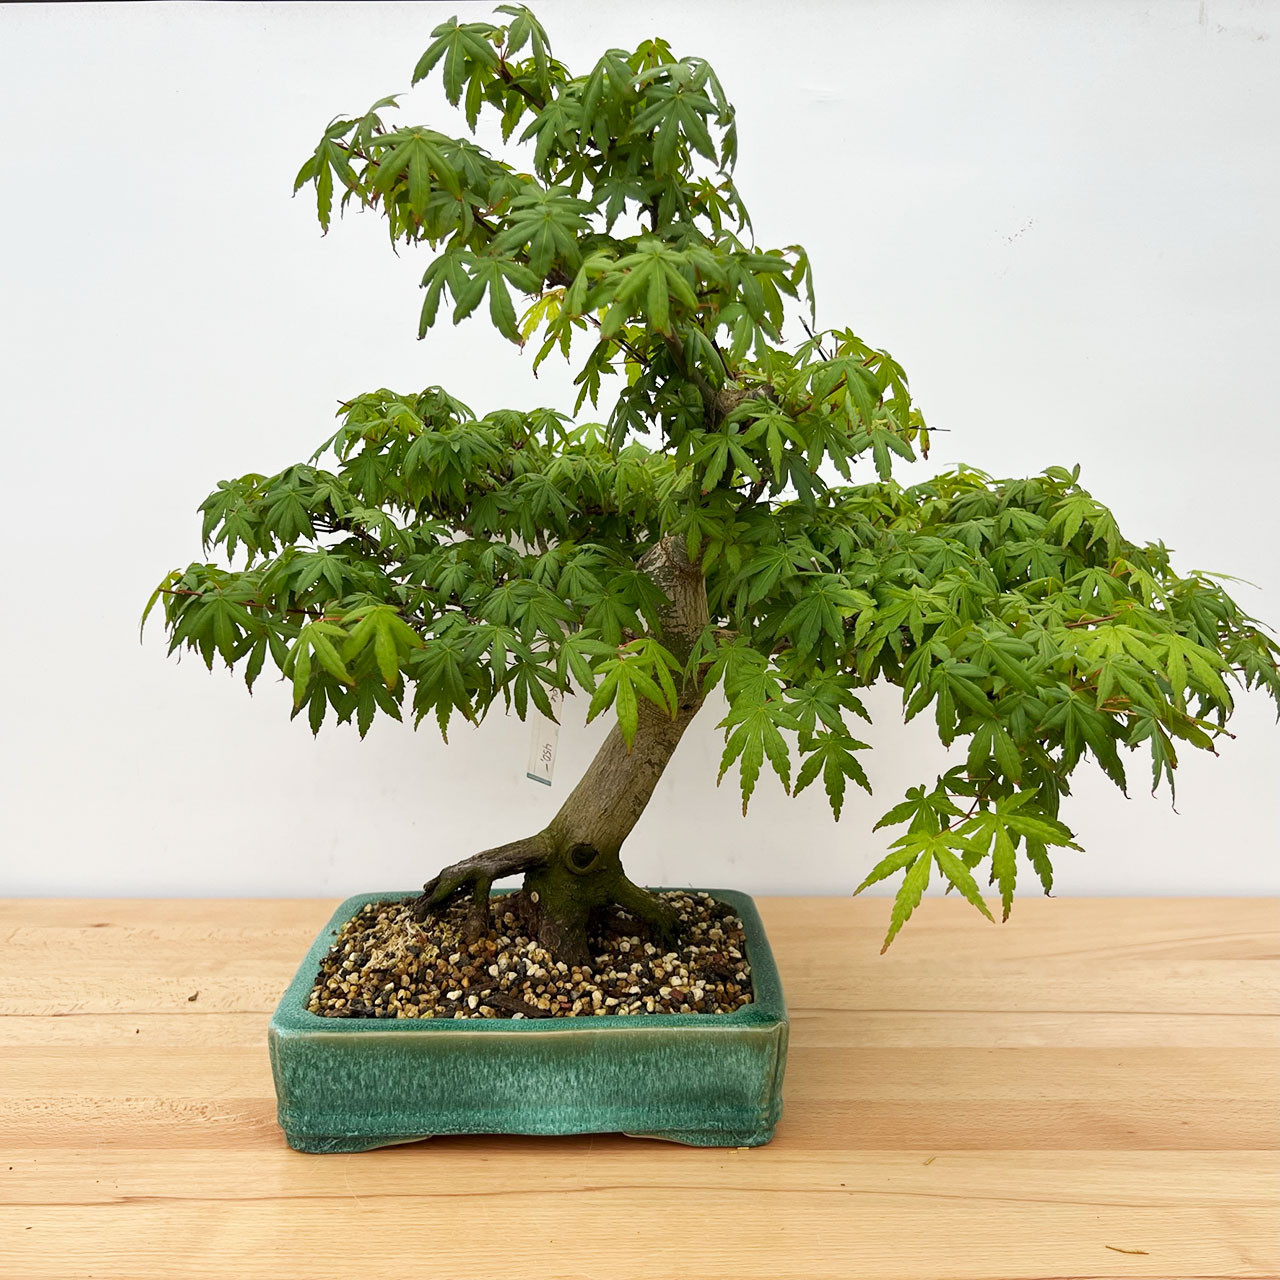 japanese maple tree bonsai